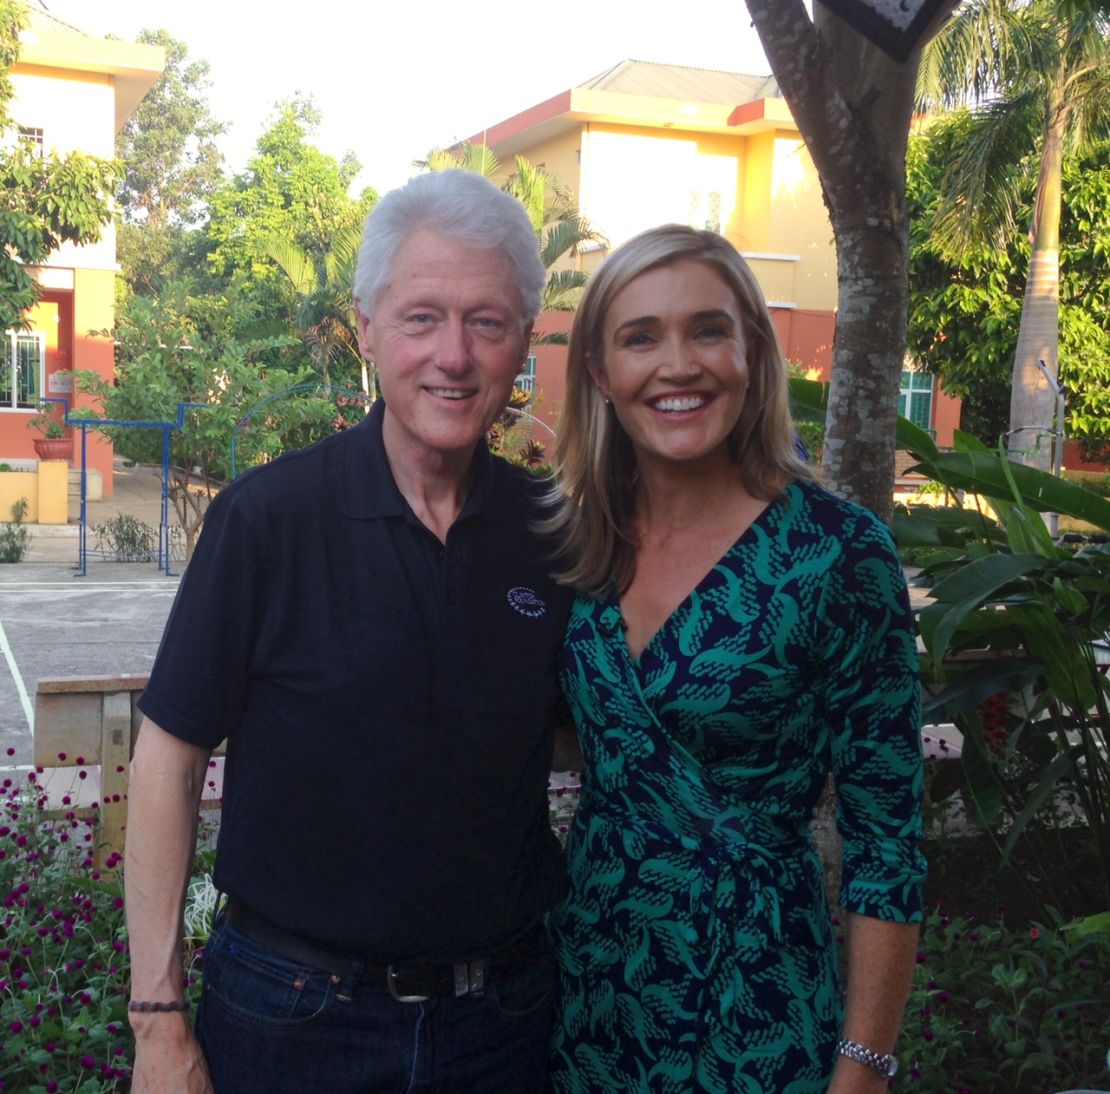 Former Pres. Bill Clinton and CNN's Anna Coren in Vietnam.